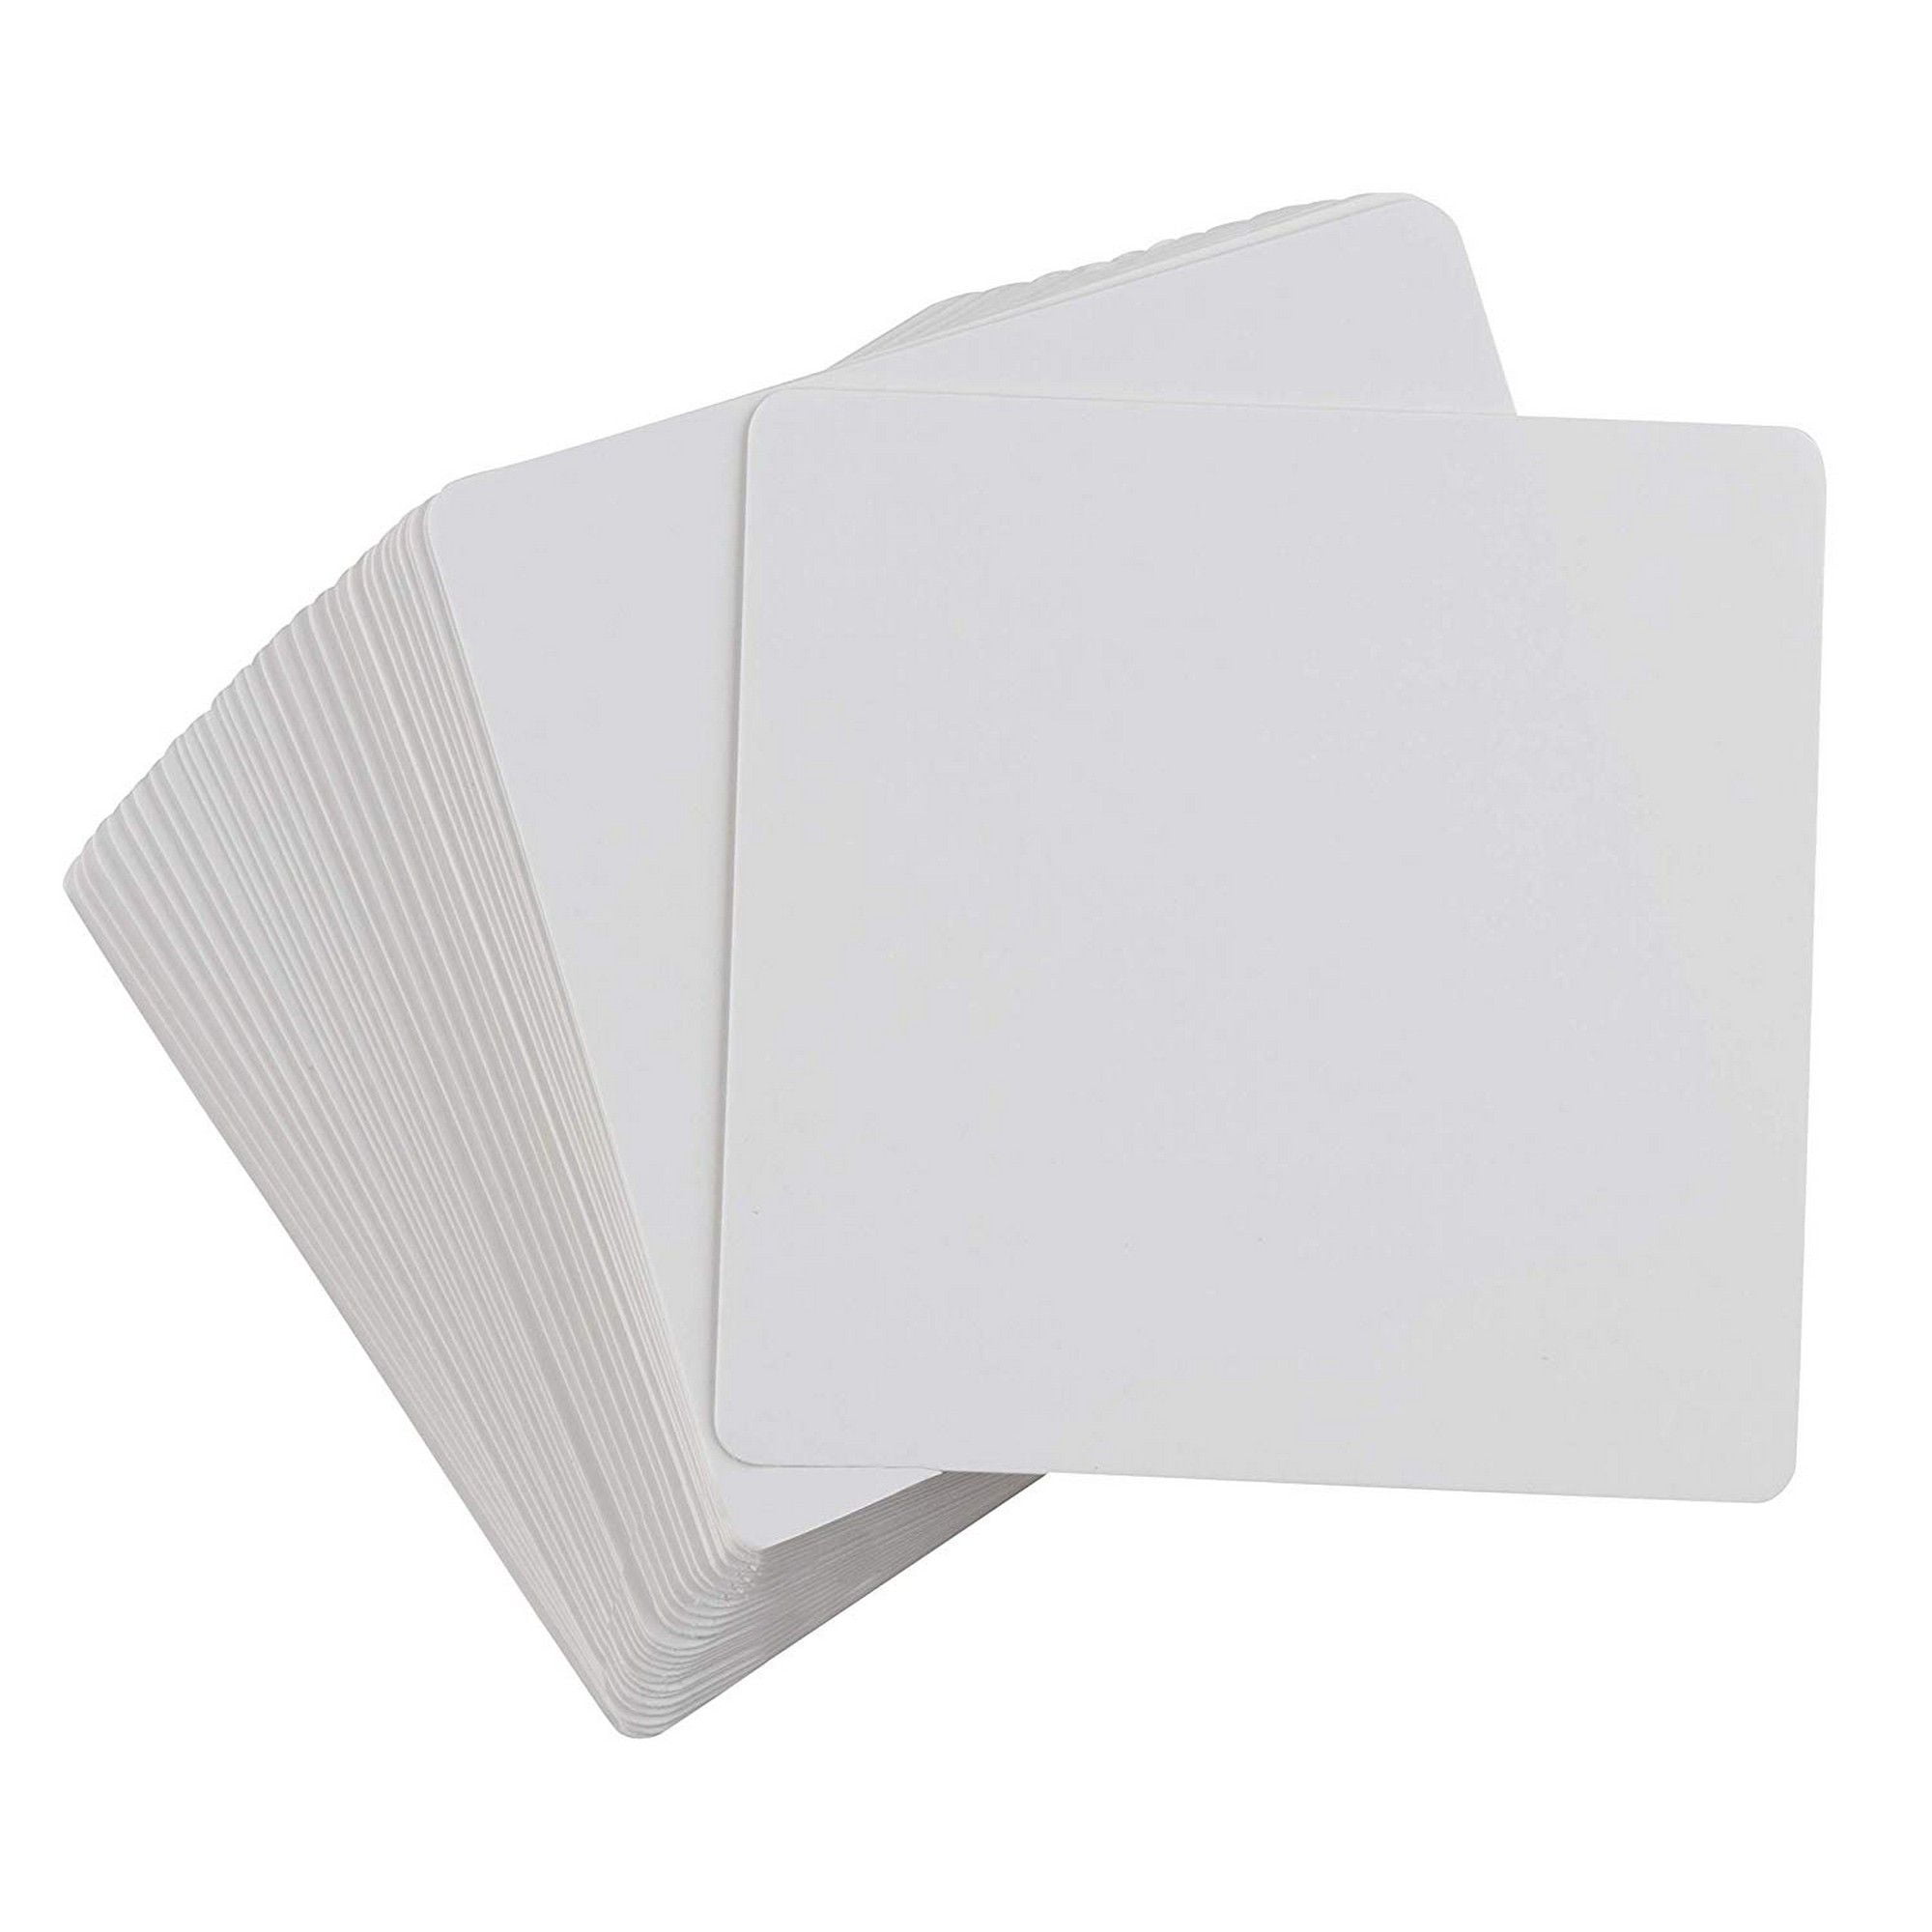 180pcs Blank Playing Cards White Blank Index Flash Cards DIY Graffiti Game Card 